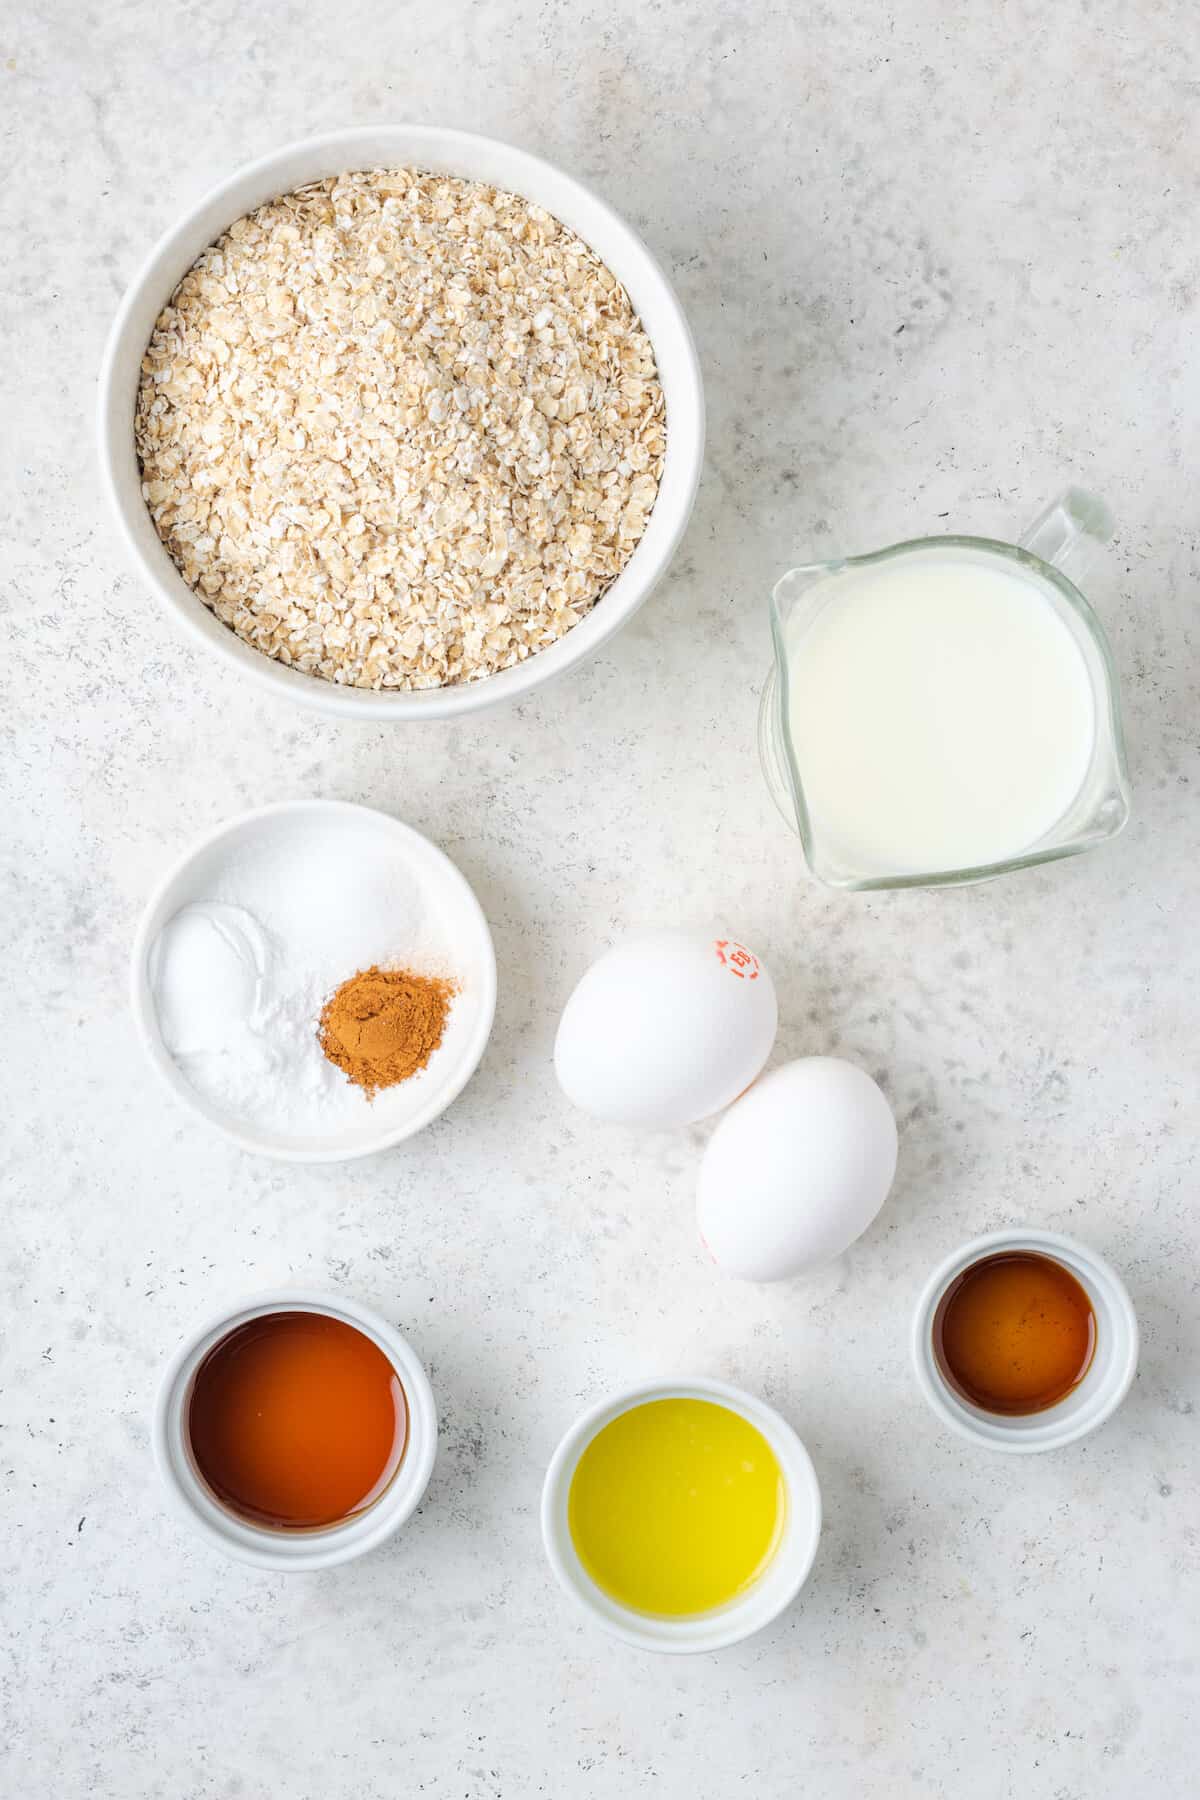 Ingredients for oatmeal pancakes - oats, milk, butter, vanilla, eggs.